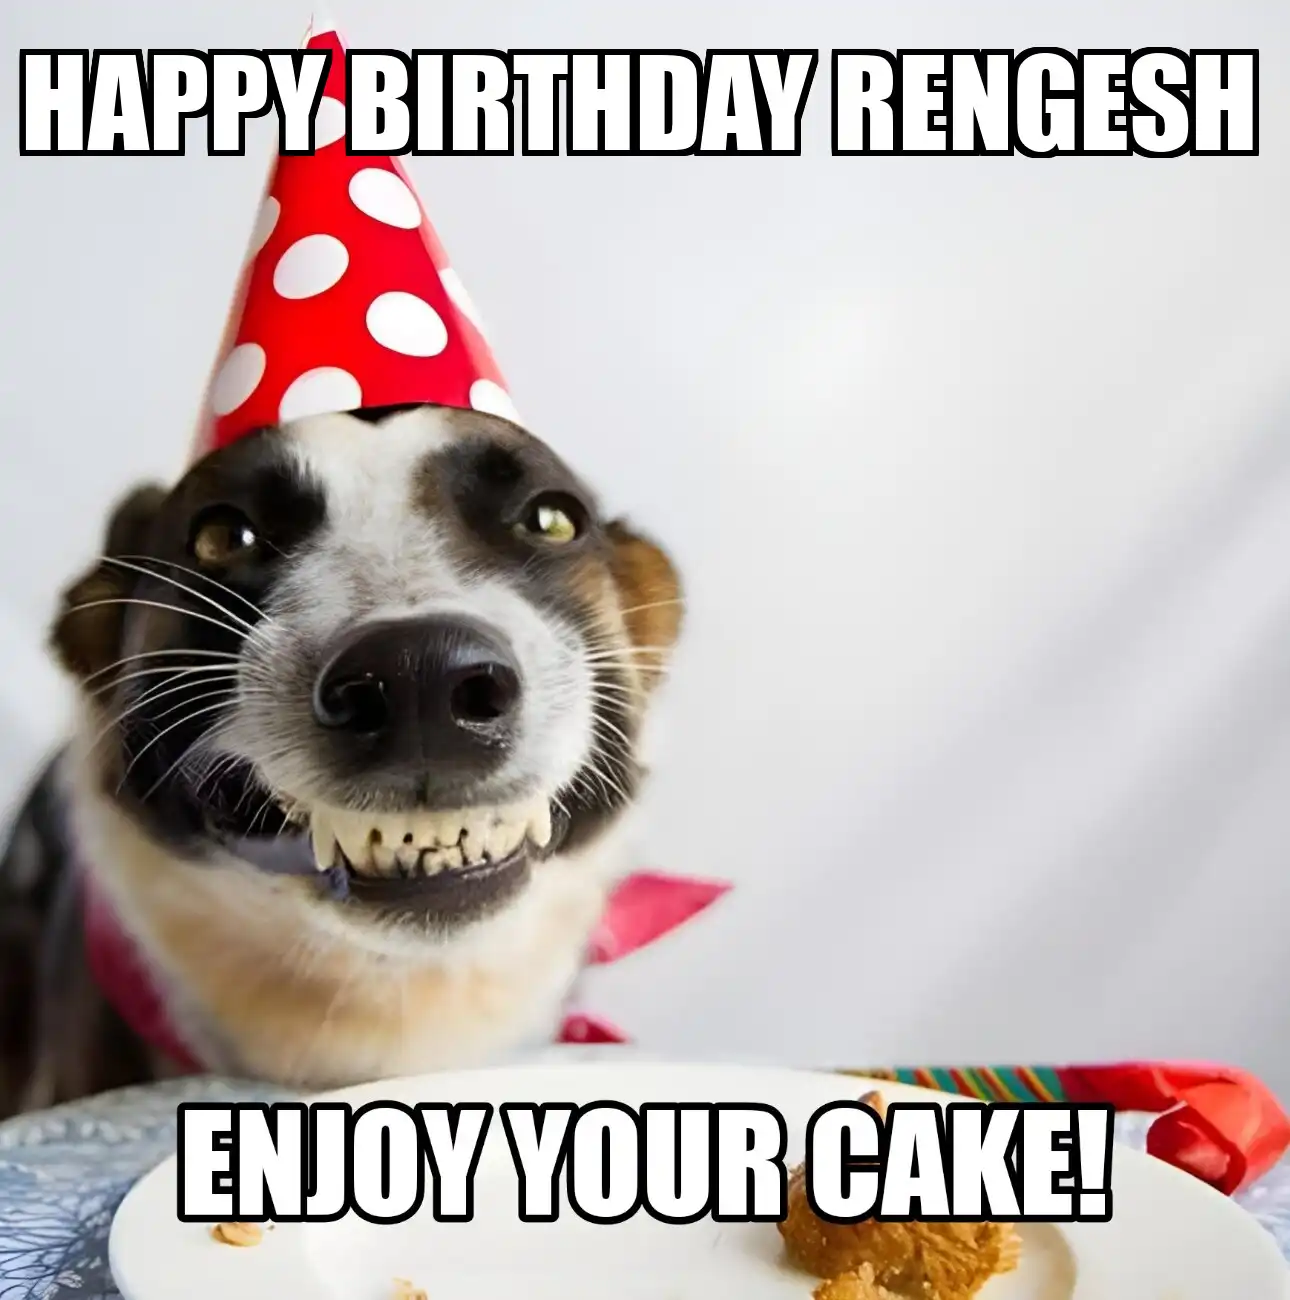 Happy Birthday Rengesh Enjoy Your Cake Dog Meme